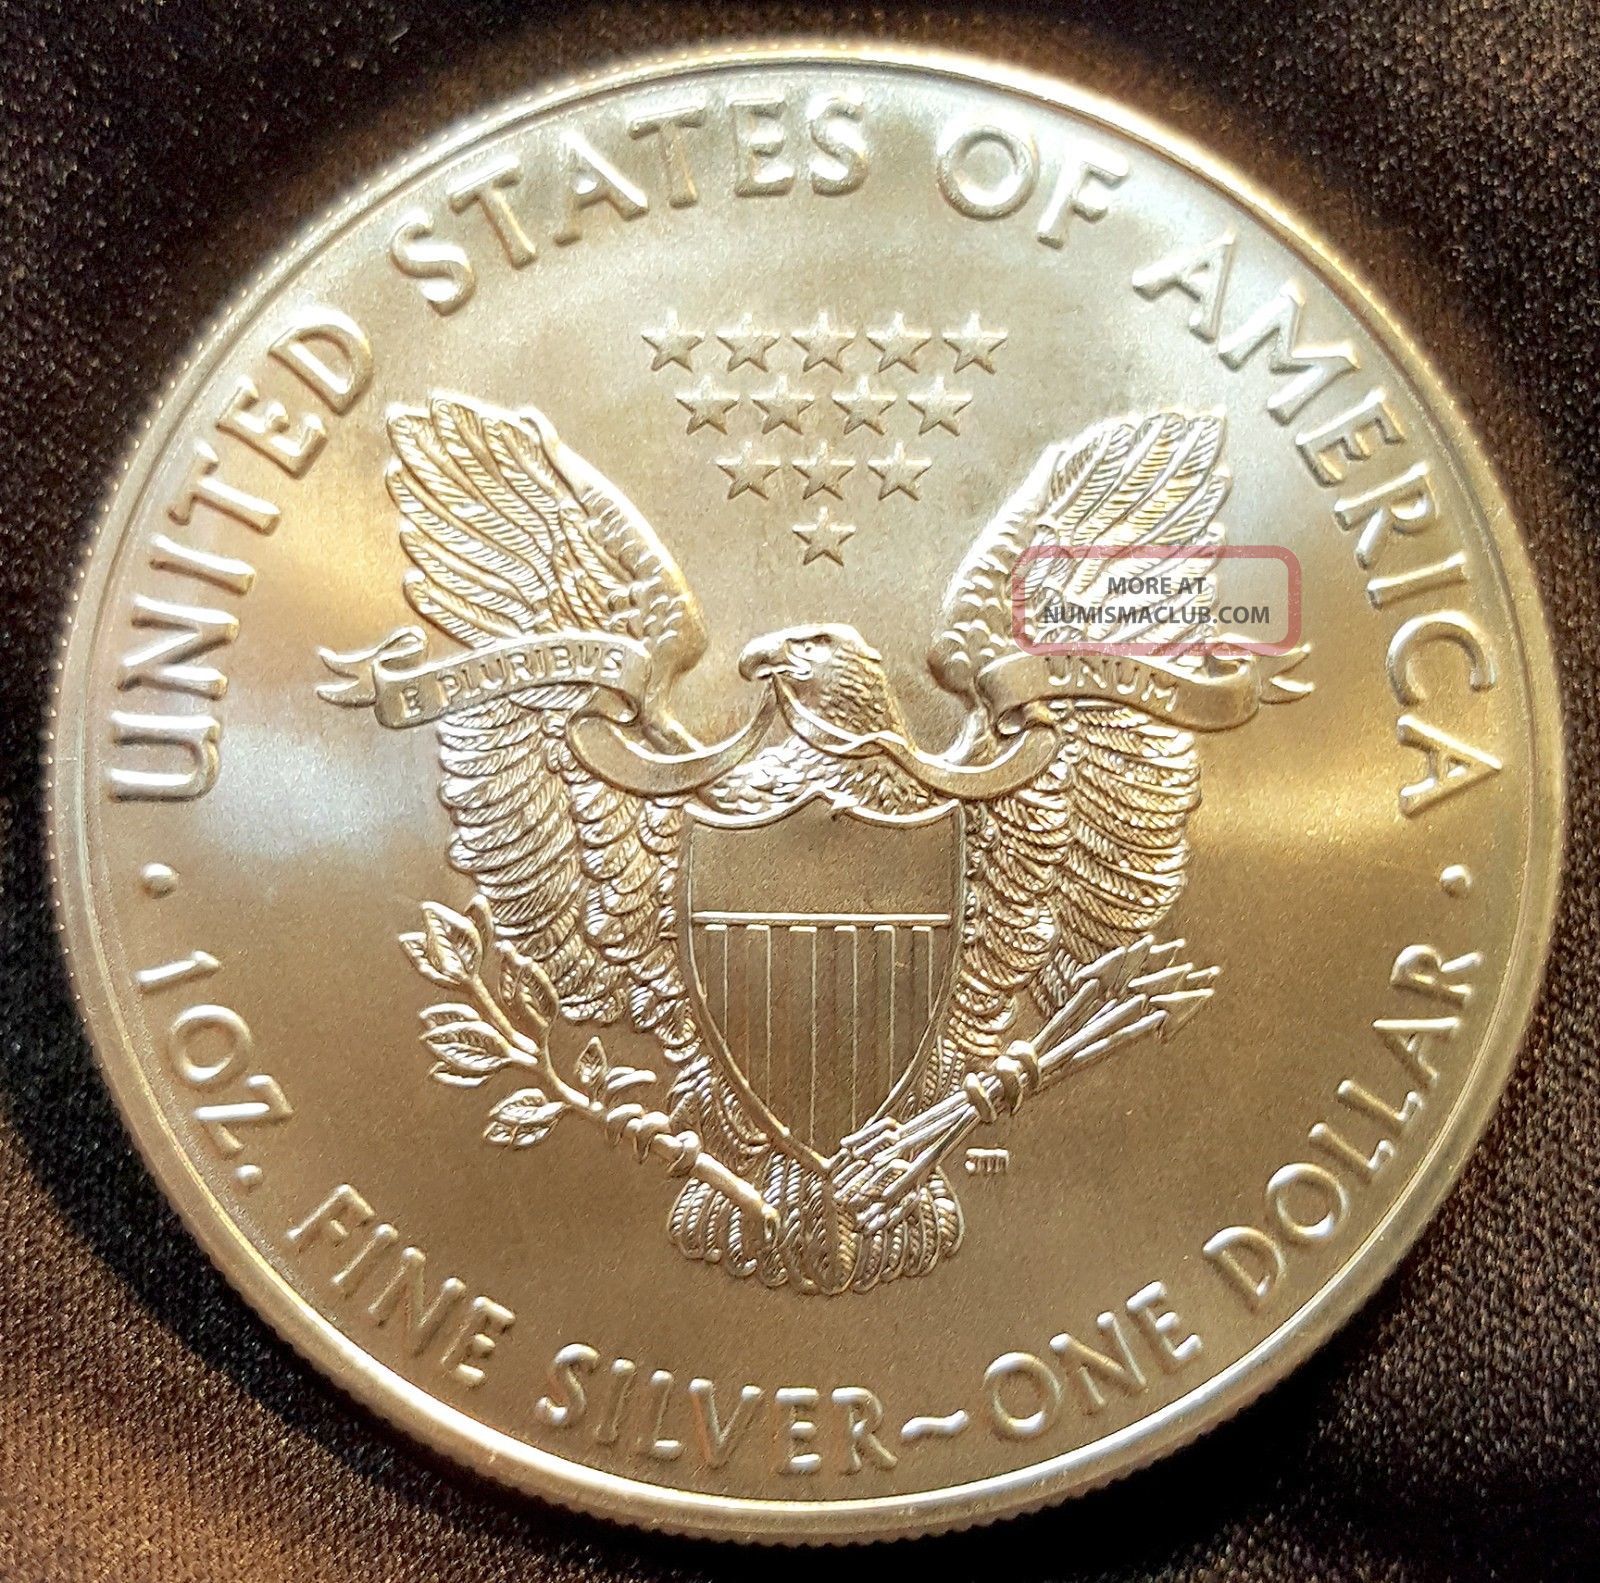 2017 Silver American Eagle 1 Oz Coin. 999 Fine Silver Dollar Uncirculated